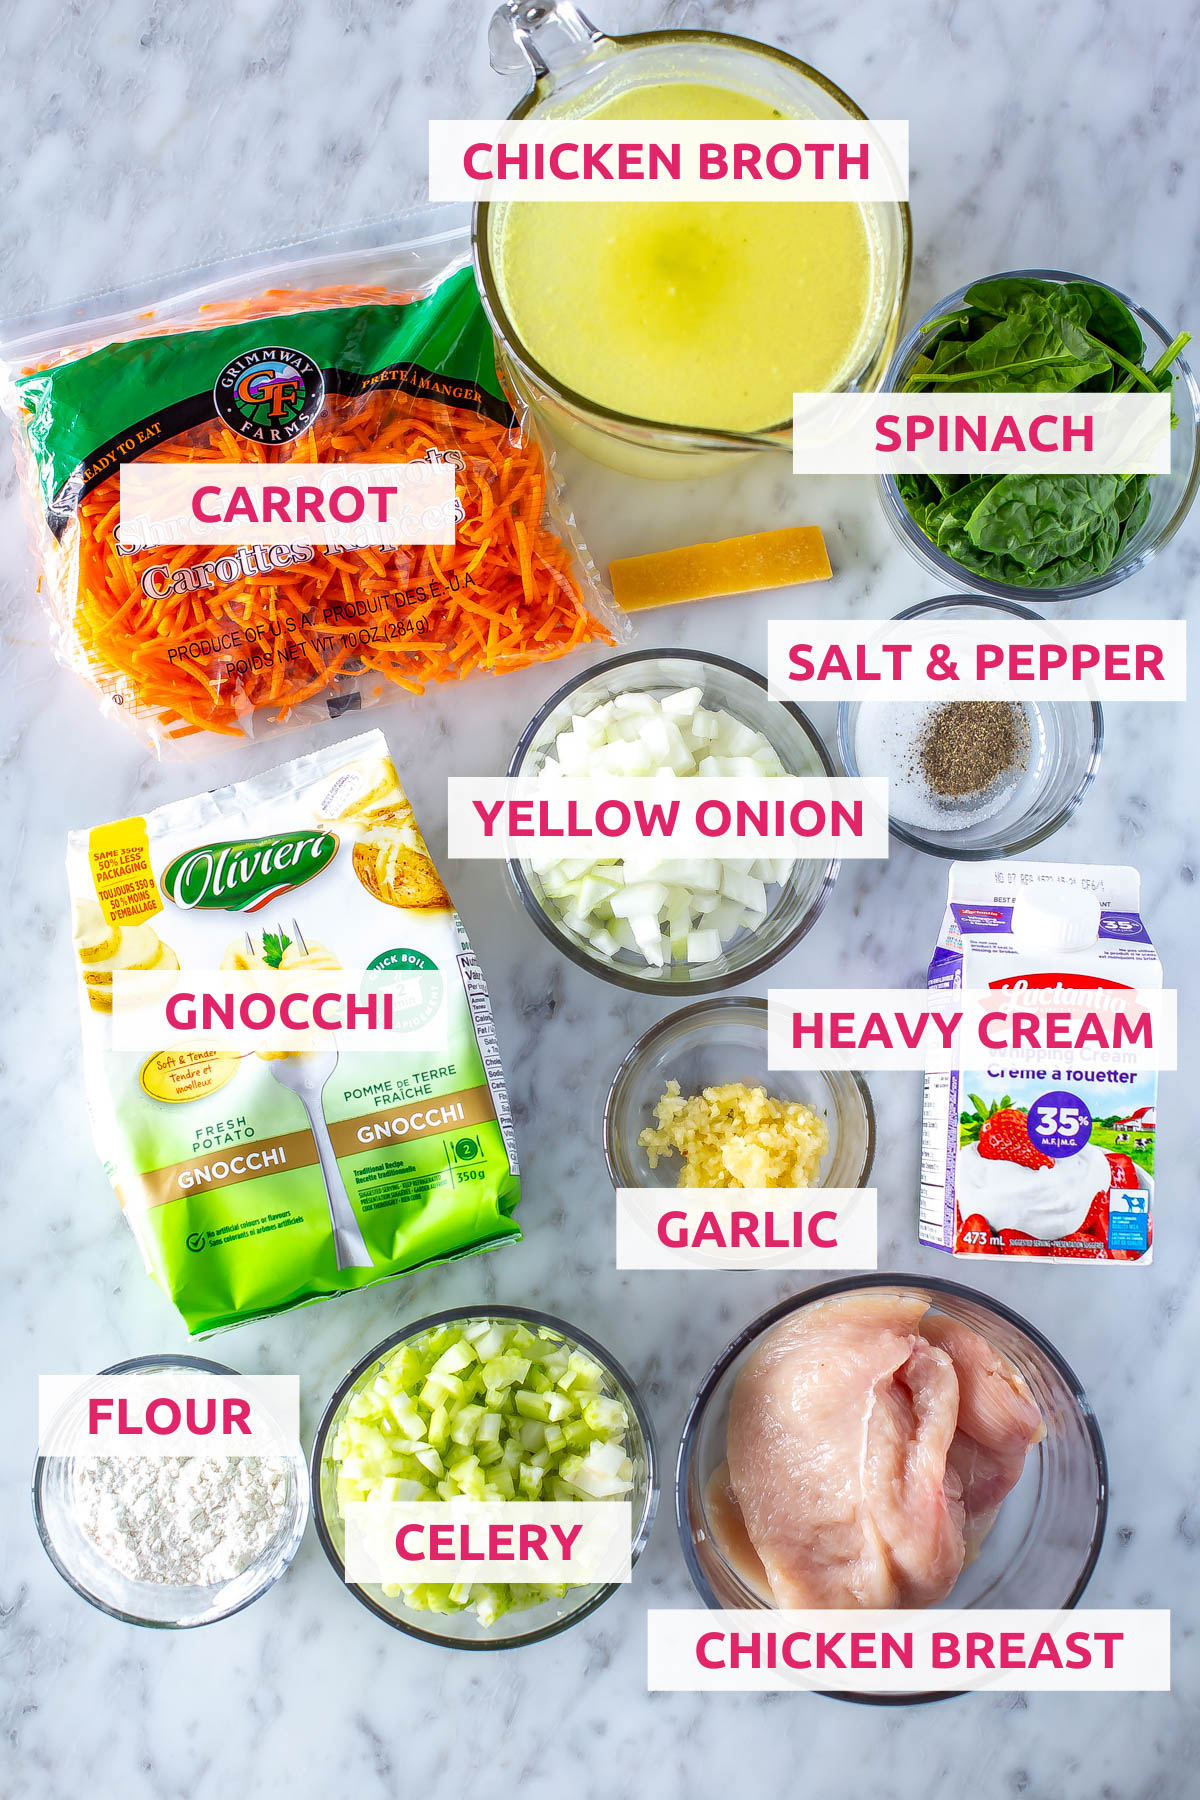 Ingredients for chicken gnocchi soup: chicken breasts, gnocchi, chicken broth, carrots, spinach, yellow onion, salt, pepper, flour, celery, garlic and heavy cream.